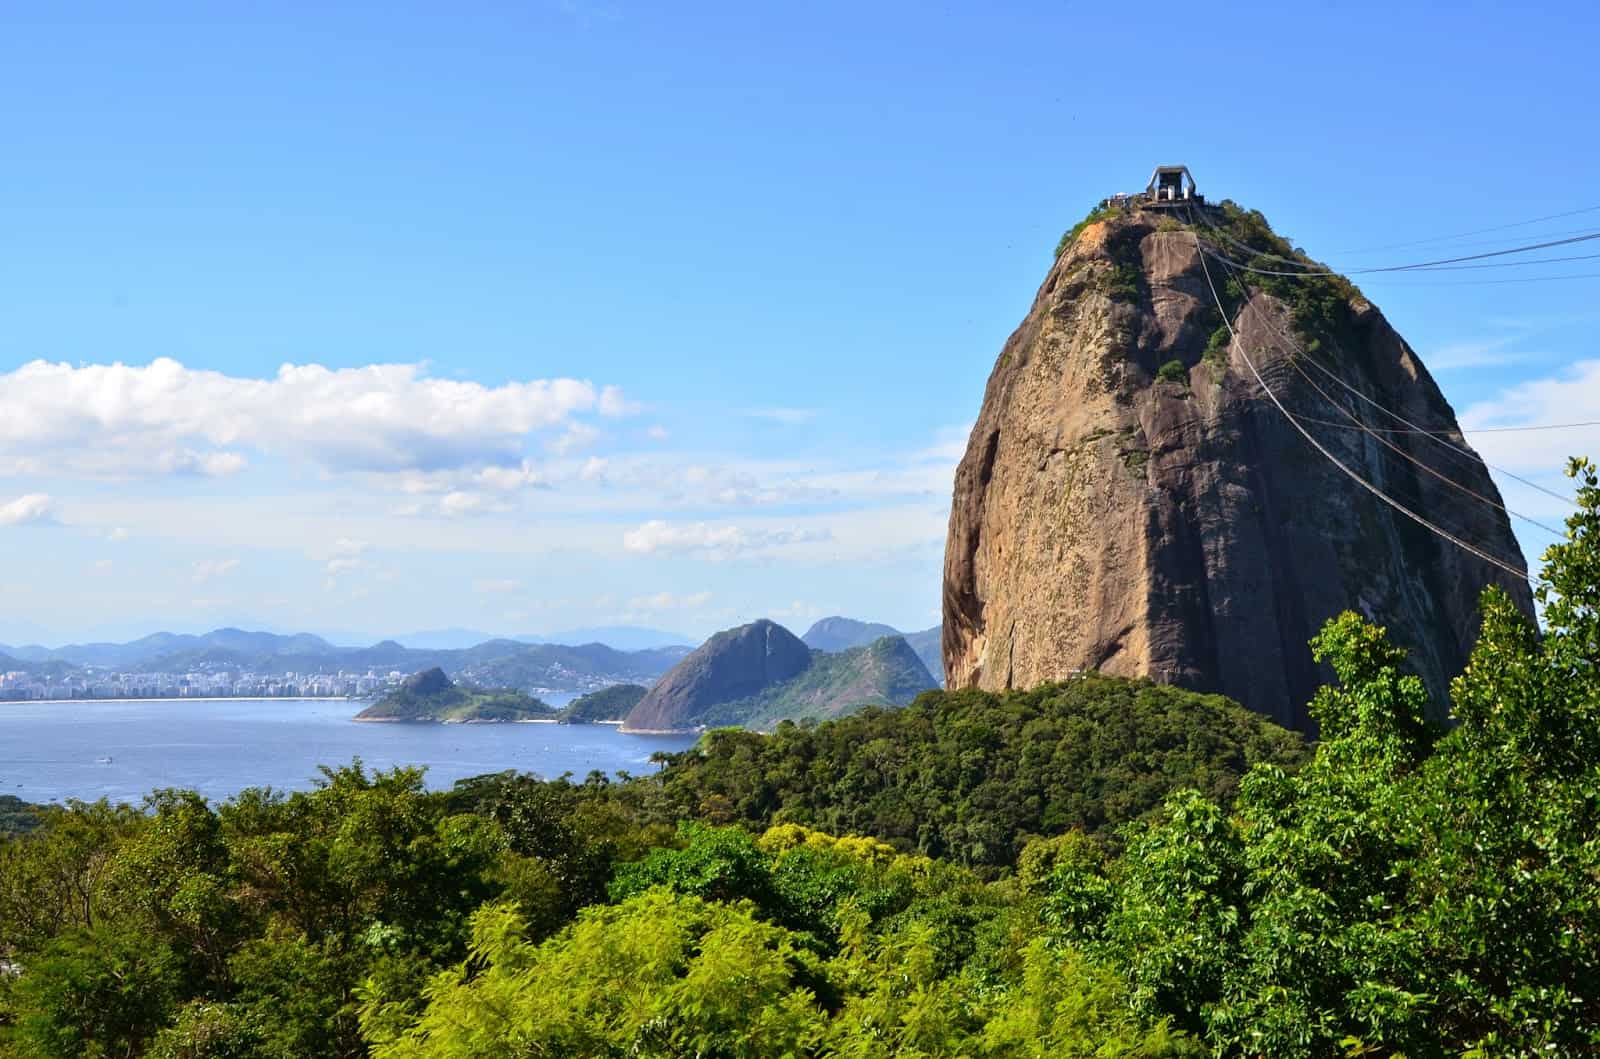 Sugarloaf Mountain from Morro da Urca in Rio de Janeiro, Brazil